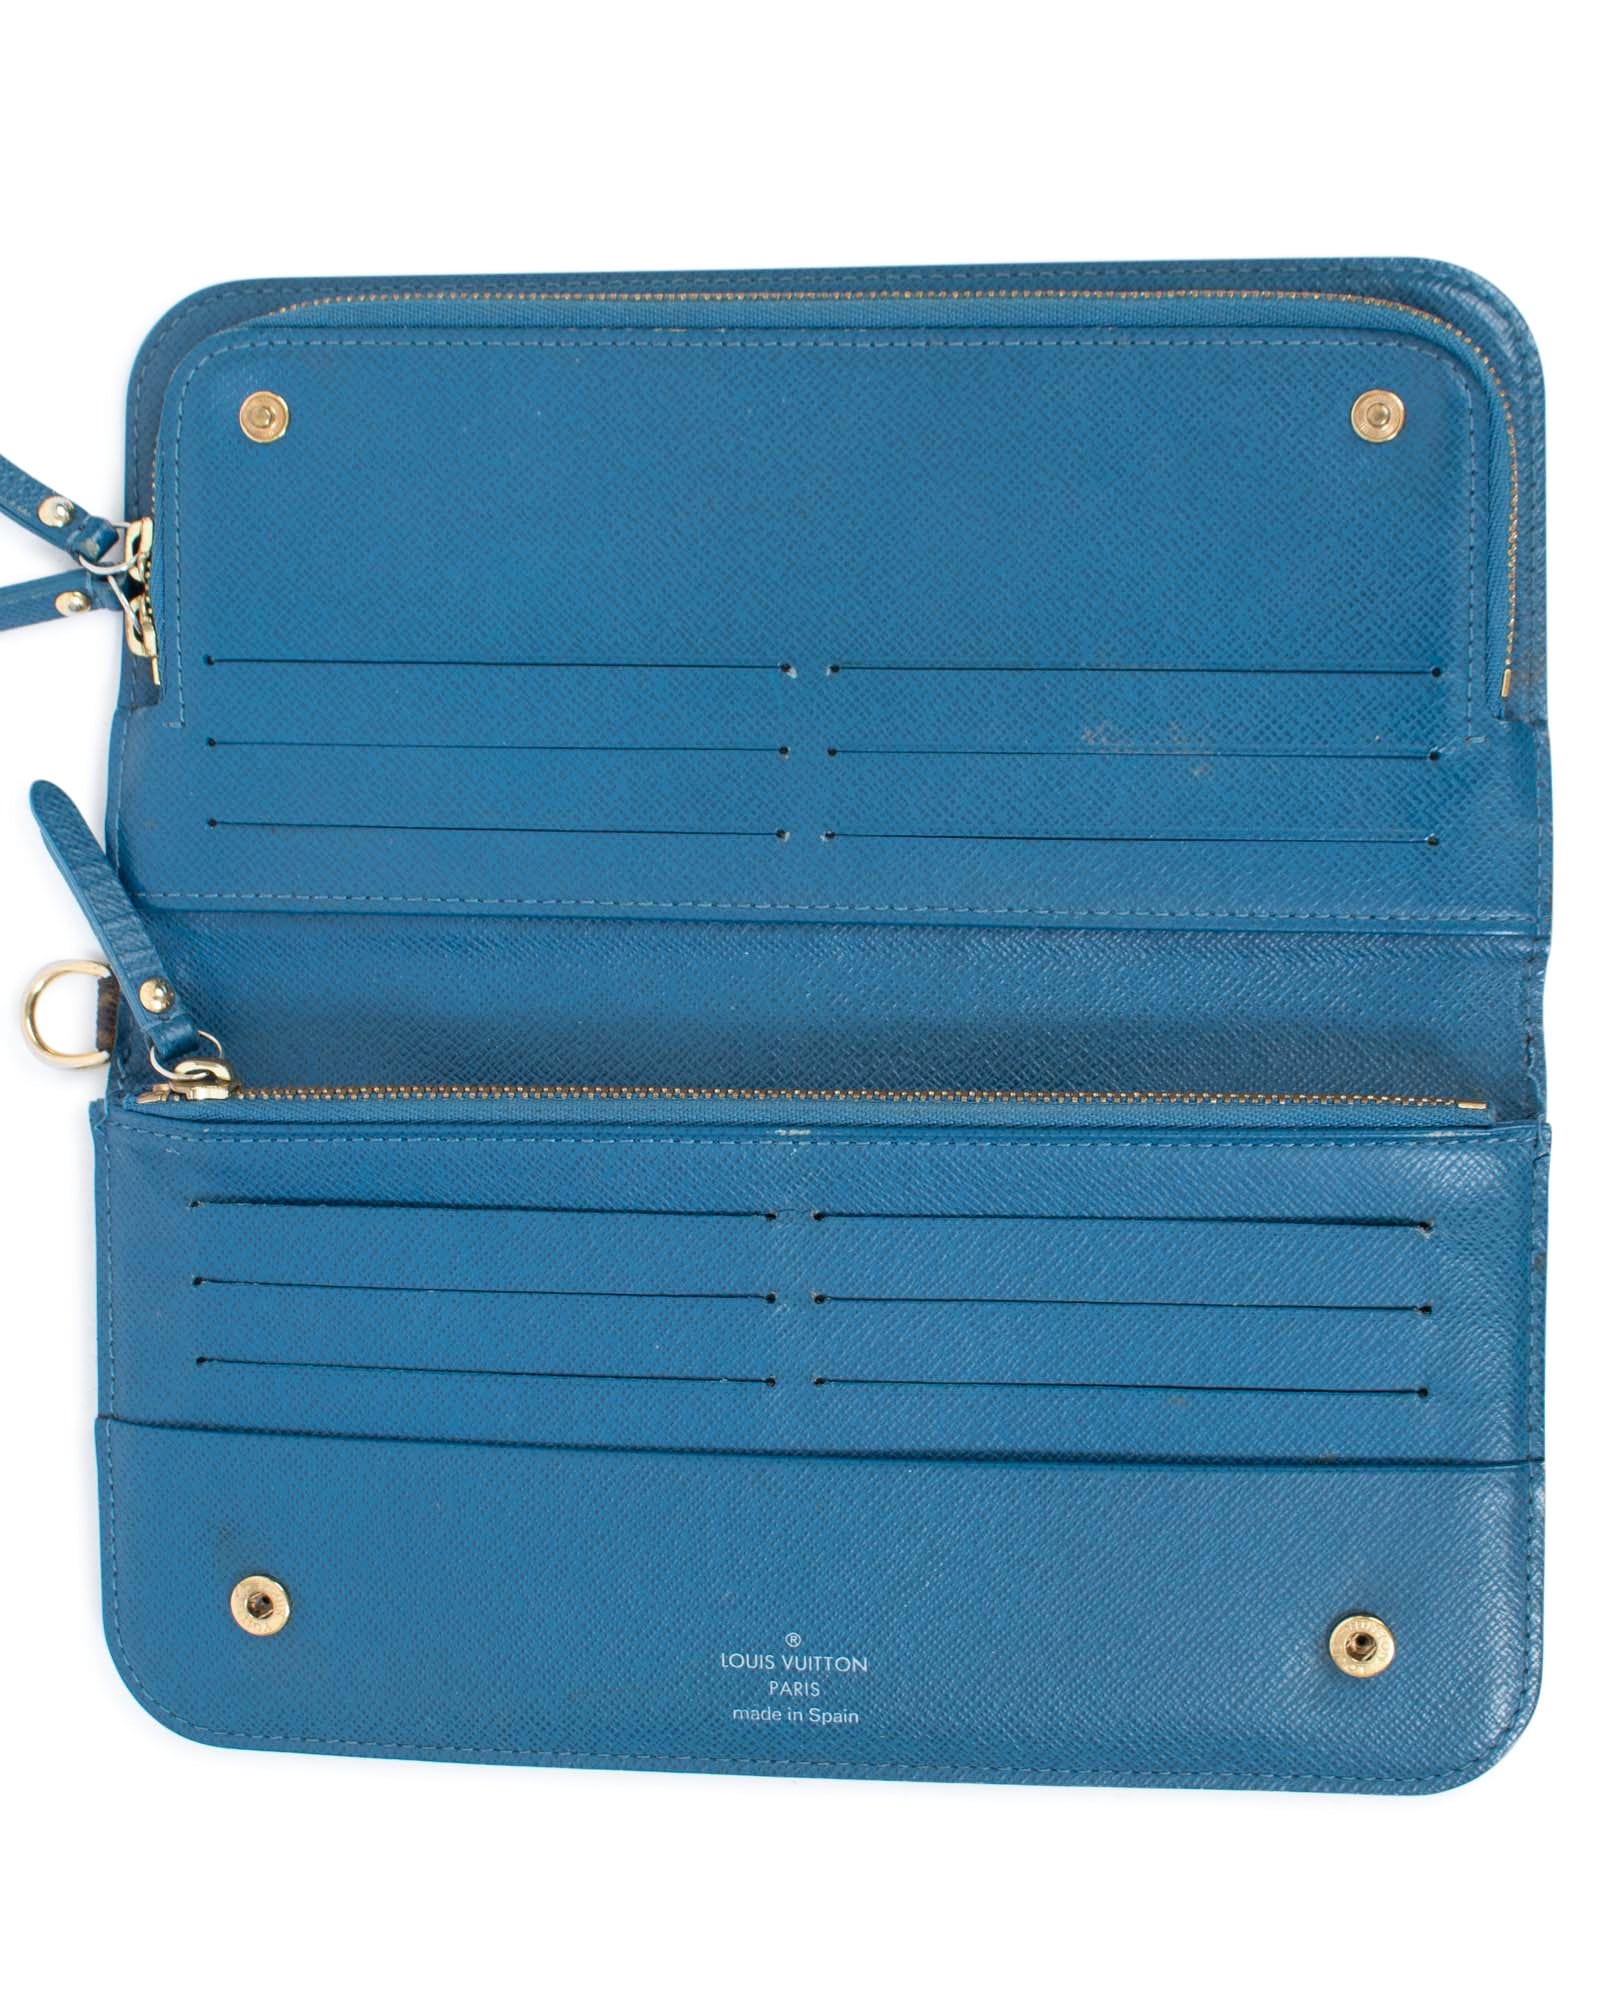 LV Louis Vuitton full size wallet, Accessories